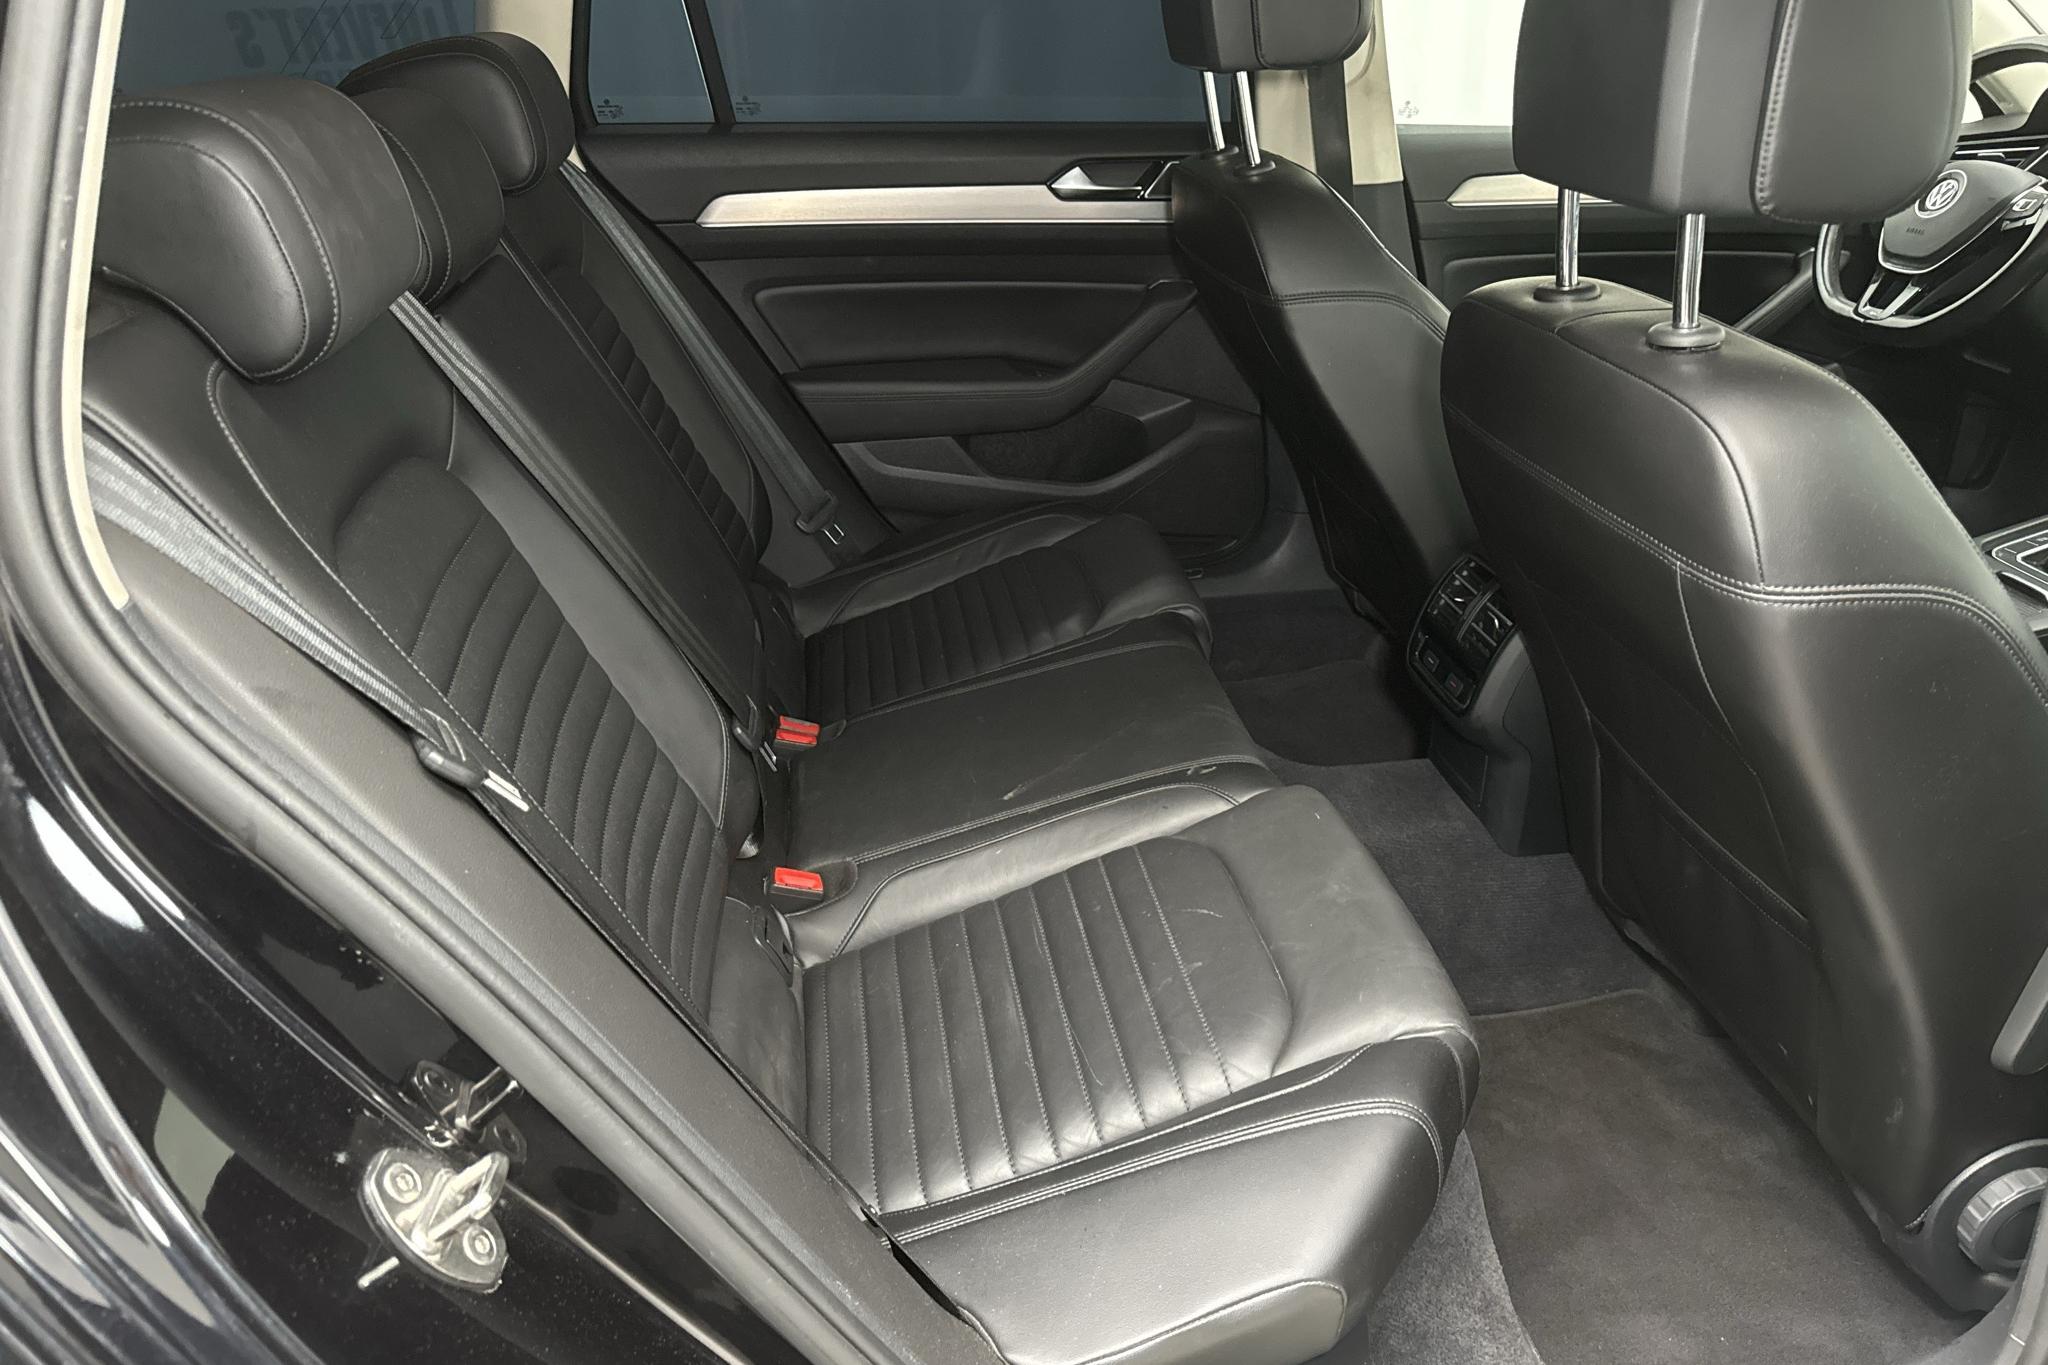 VW Passat Alltrack 2.0 TDI 4MOTION (190hk) - 249 040 km - Automatic - black - 2018